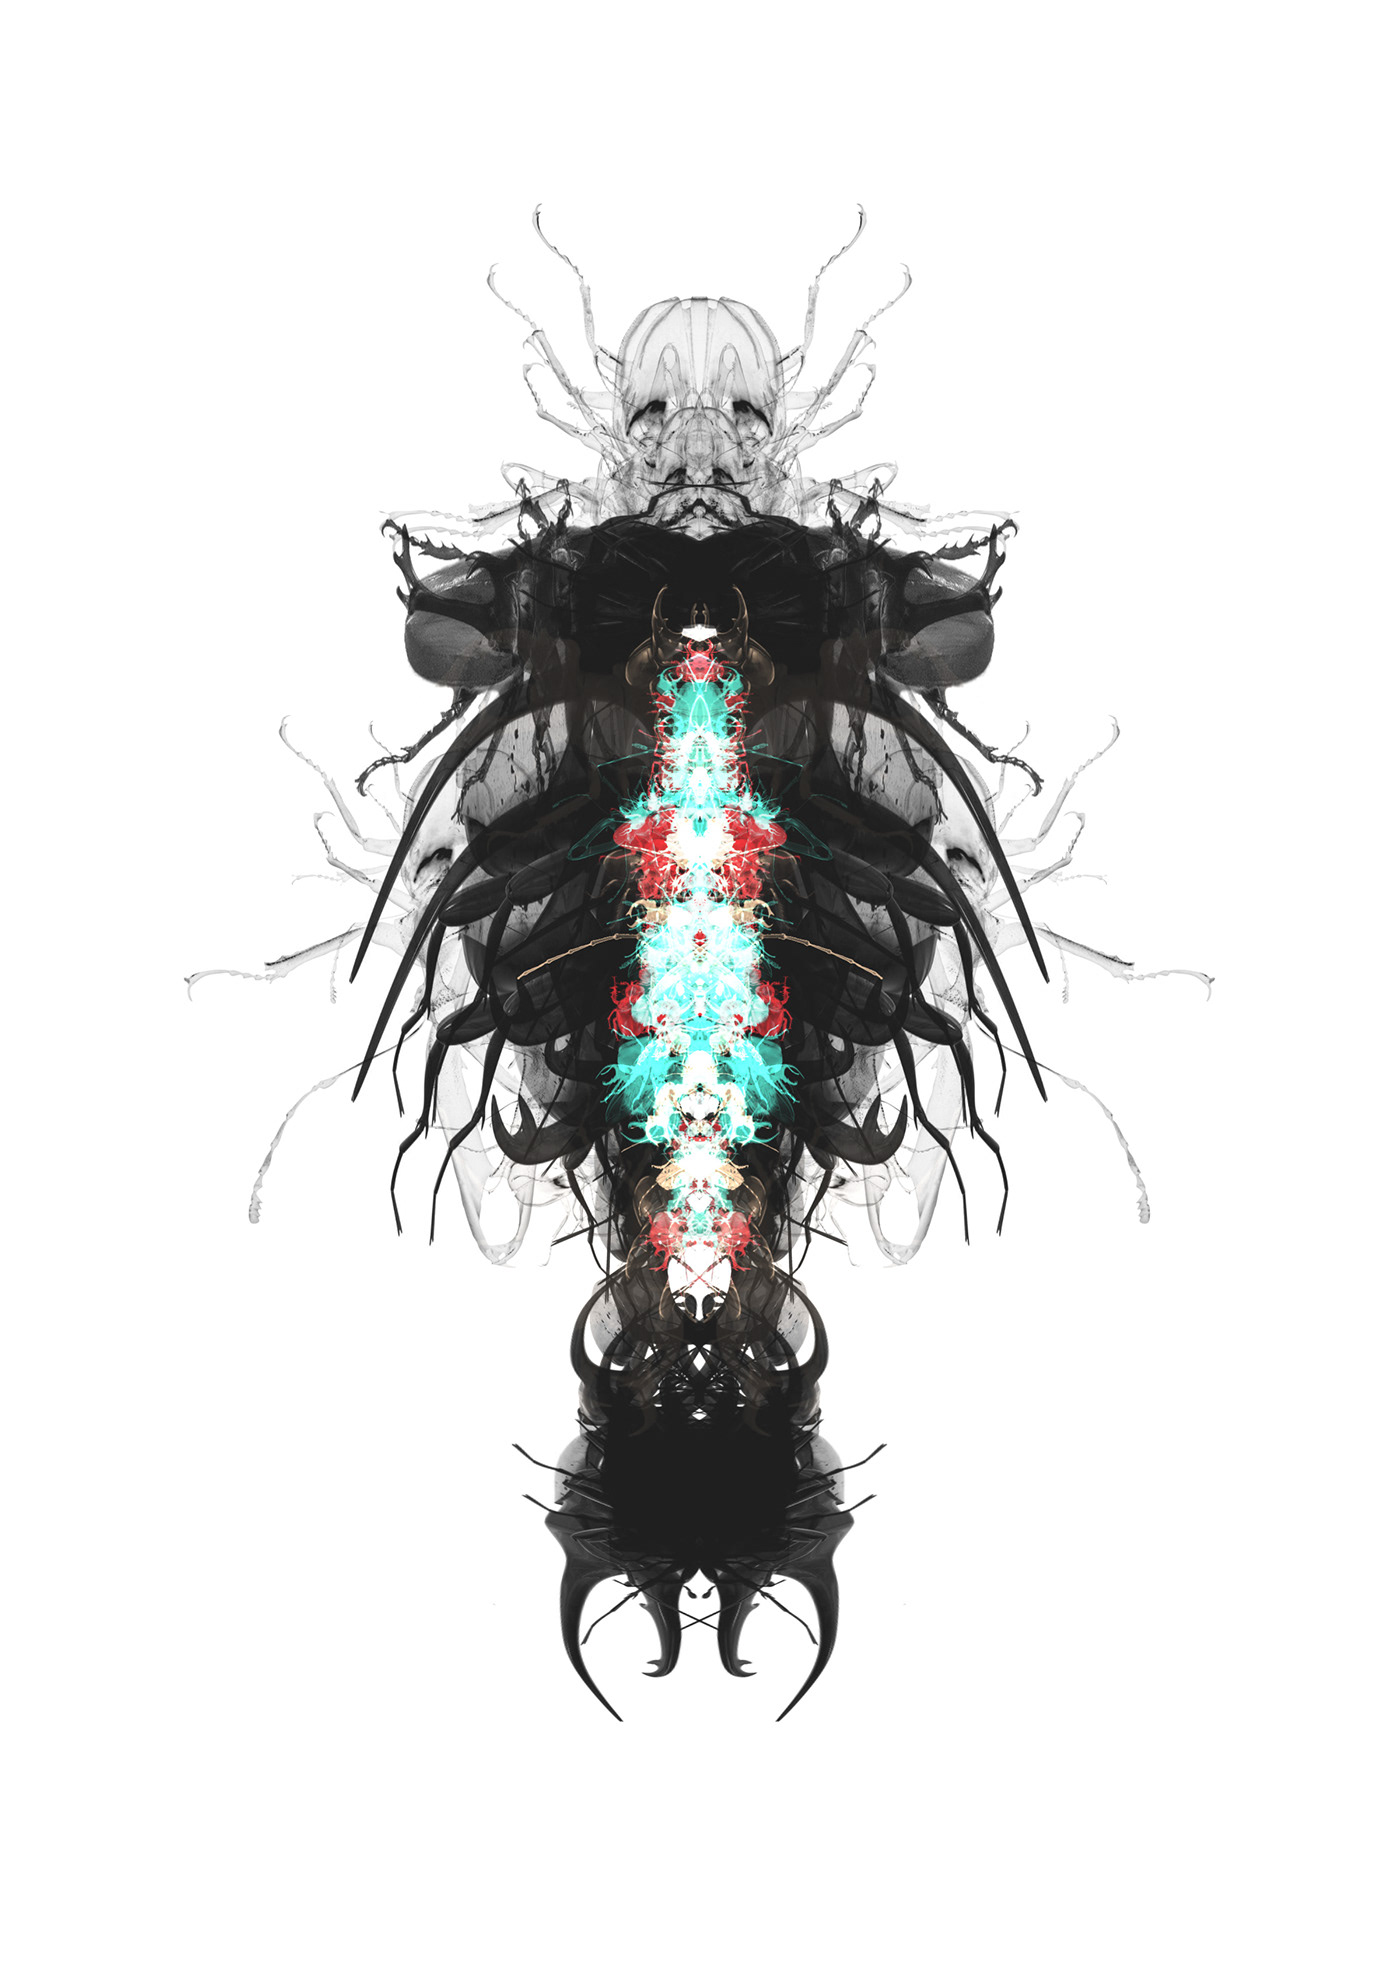 biology biomimicry design art graphic molecular morph symmetry code generative